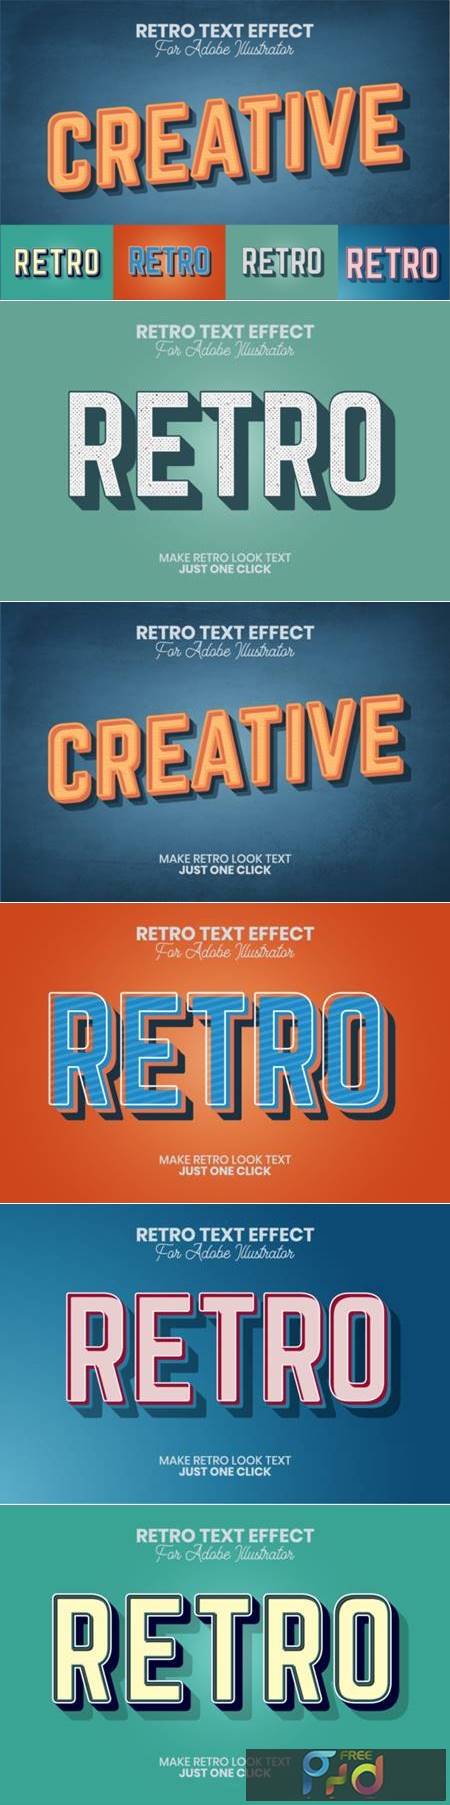 Retro Text Effect for Illustrator 4405404 1